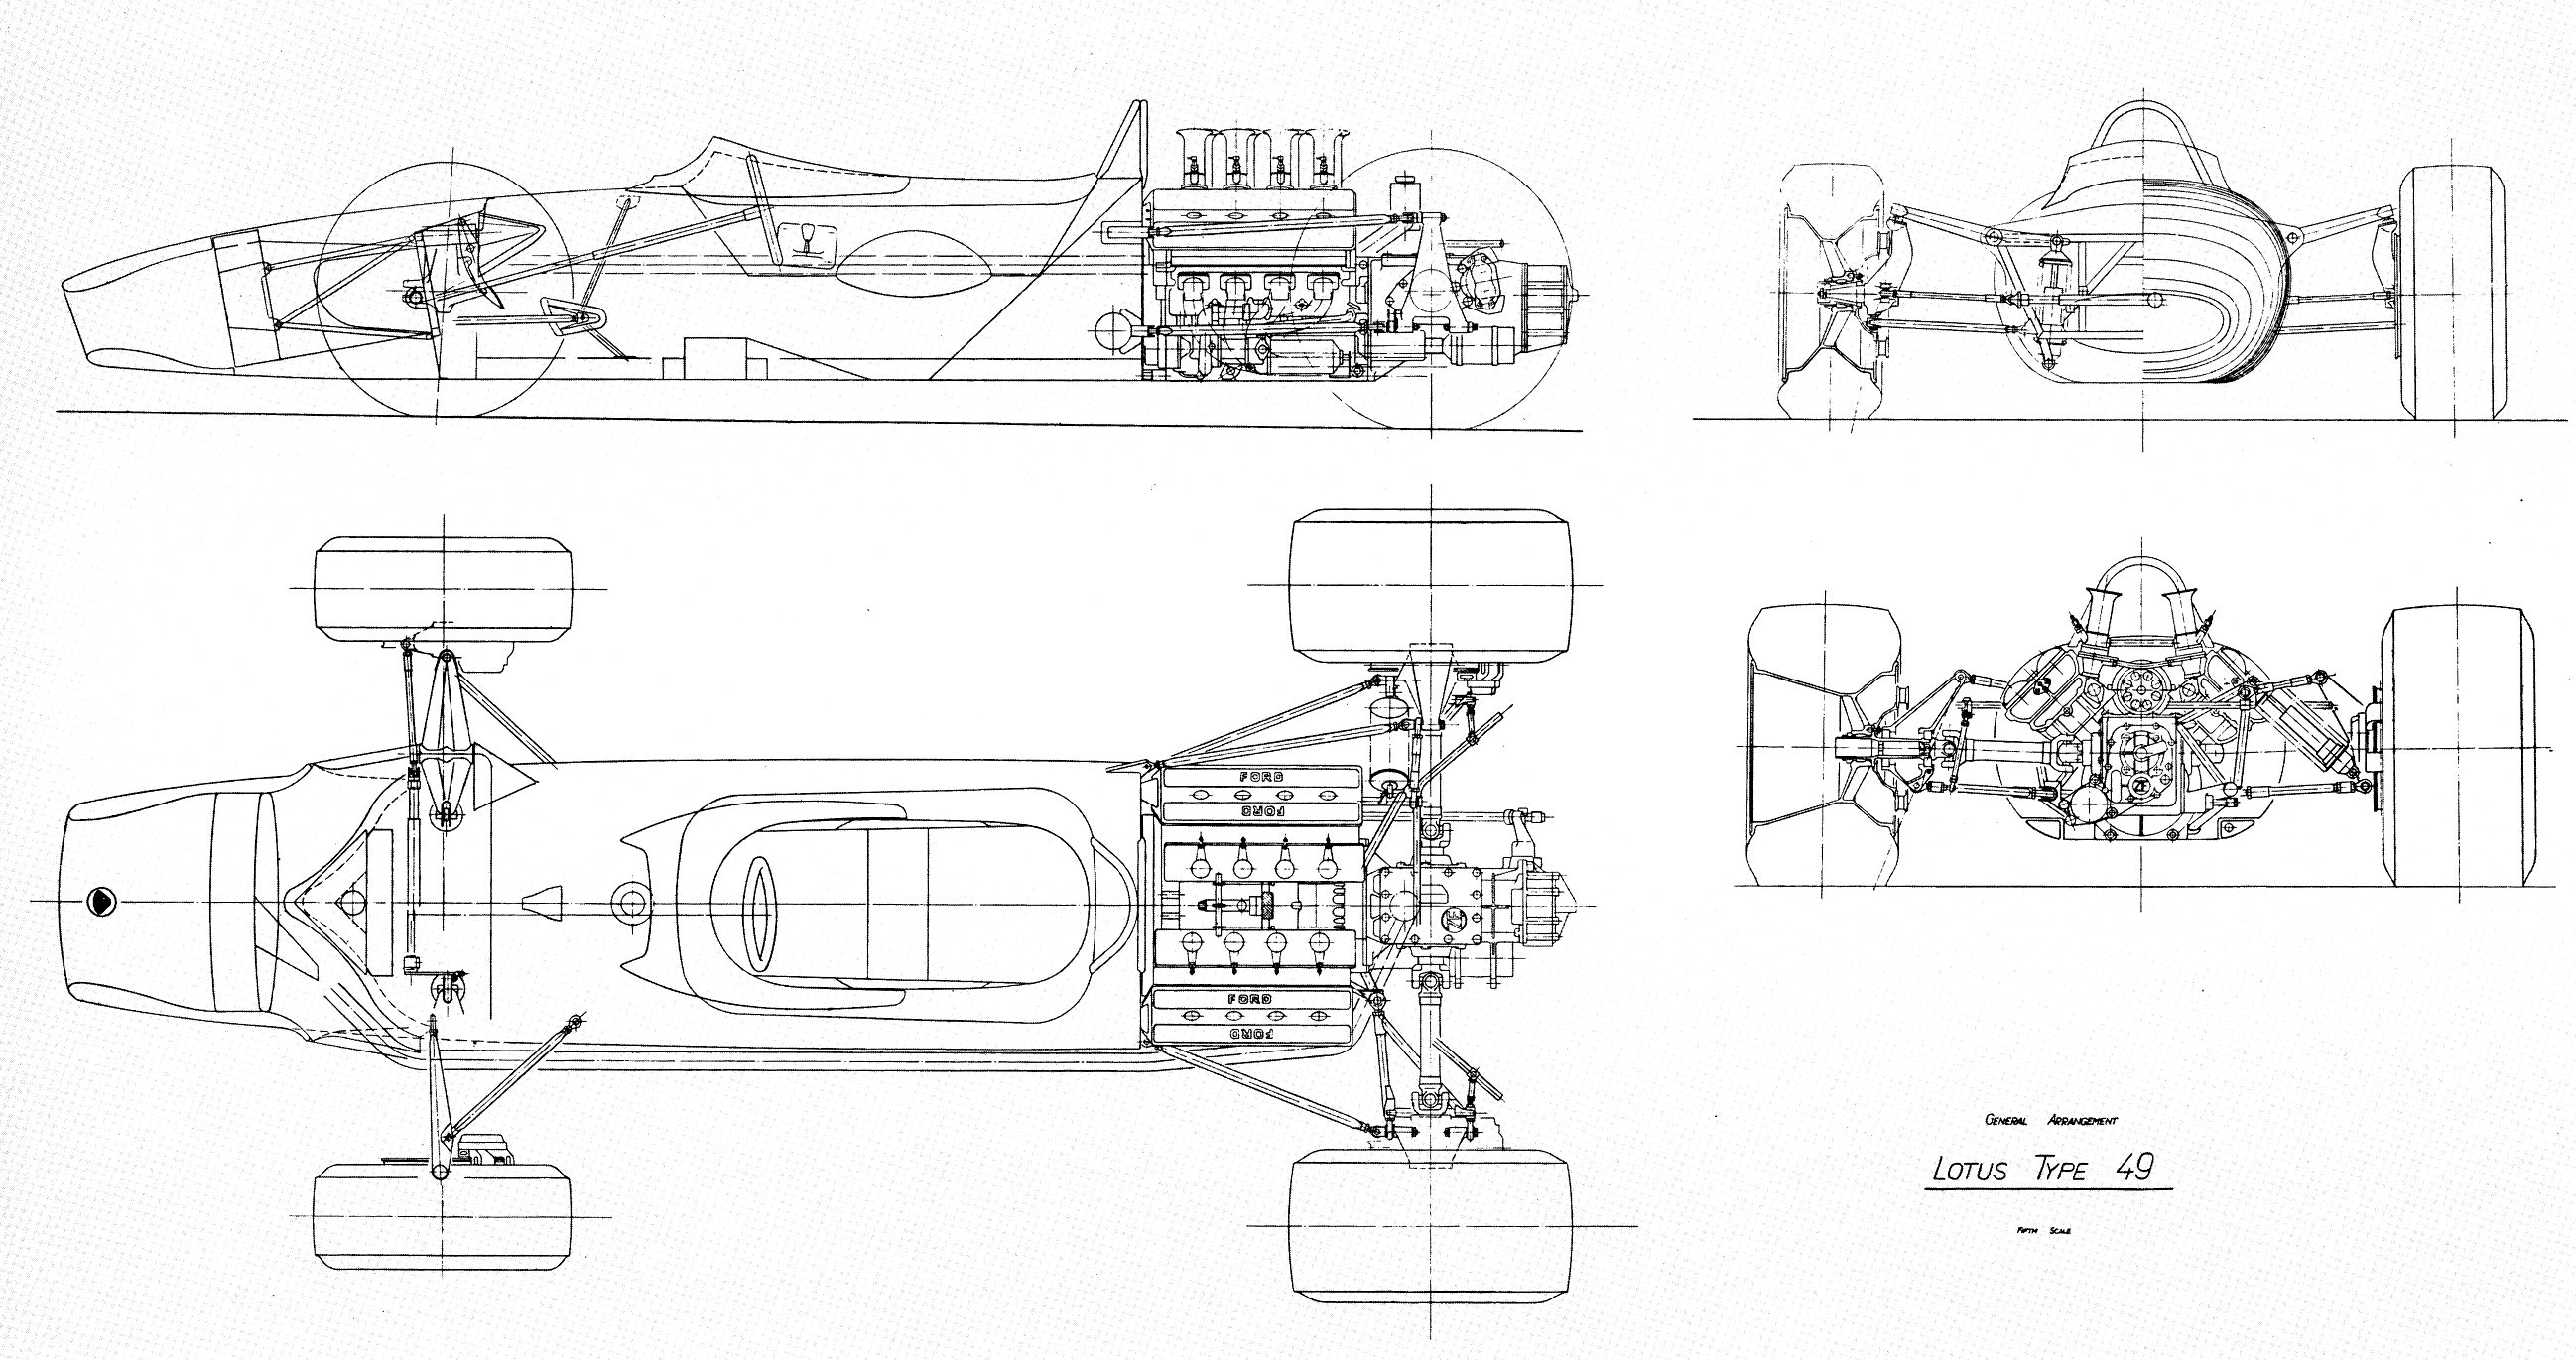 Lotus 49 blueprint